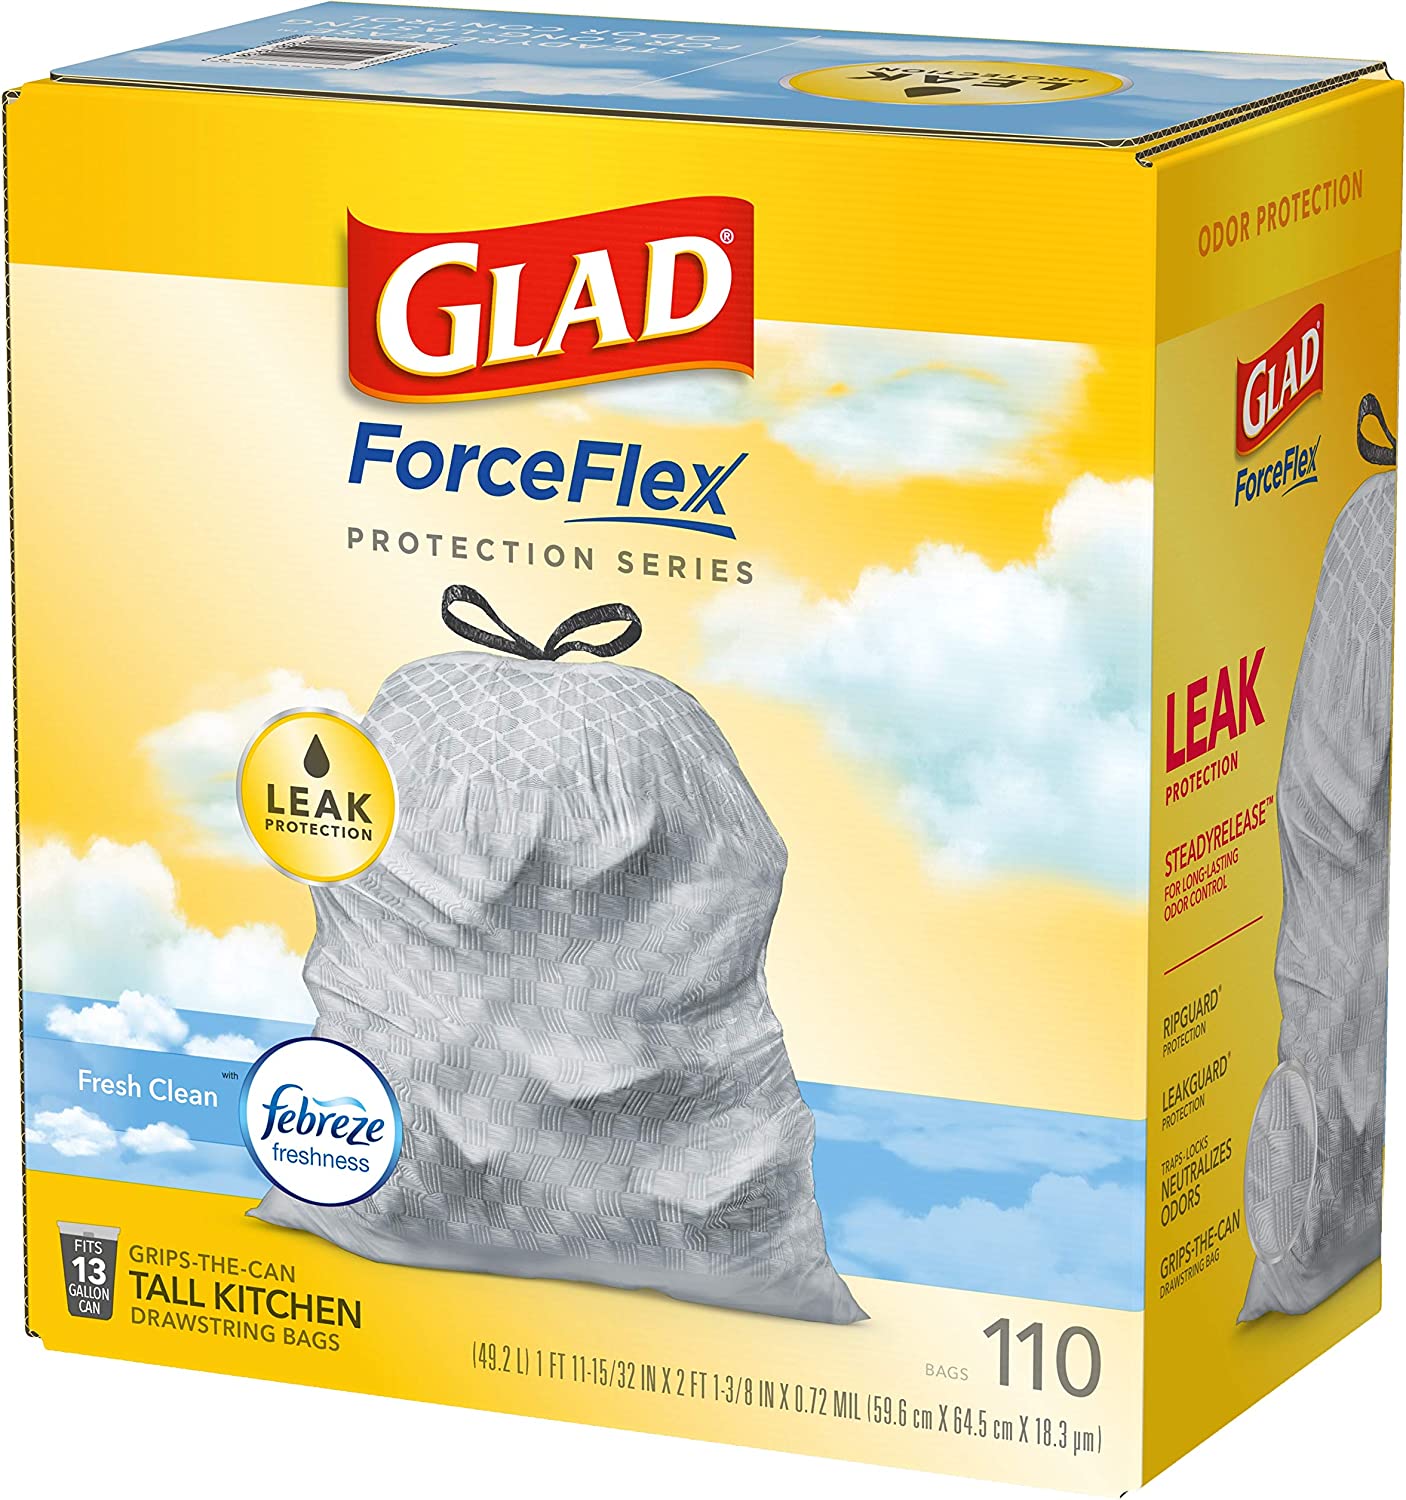 Glad Protection Series Force Flex Drawstring Fresh Clean Odor Shield 13 Gallon 1/110ct